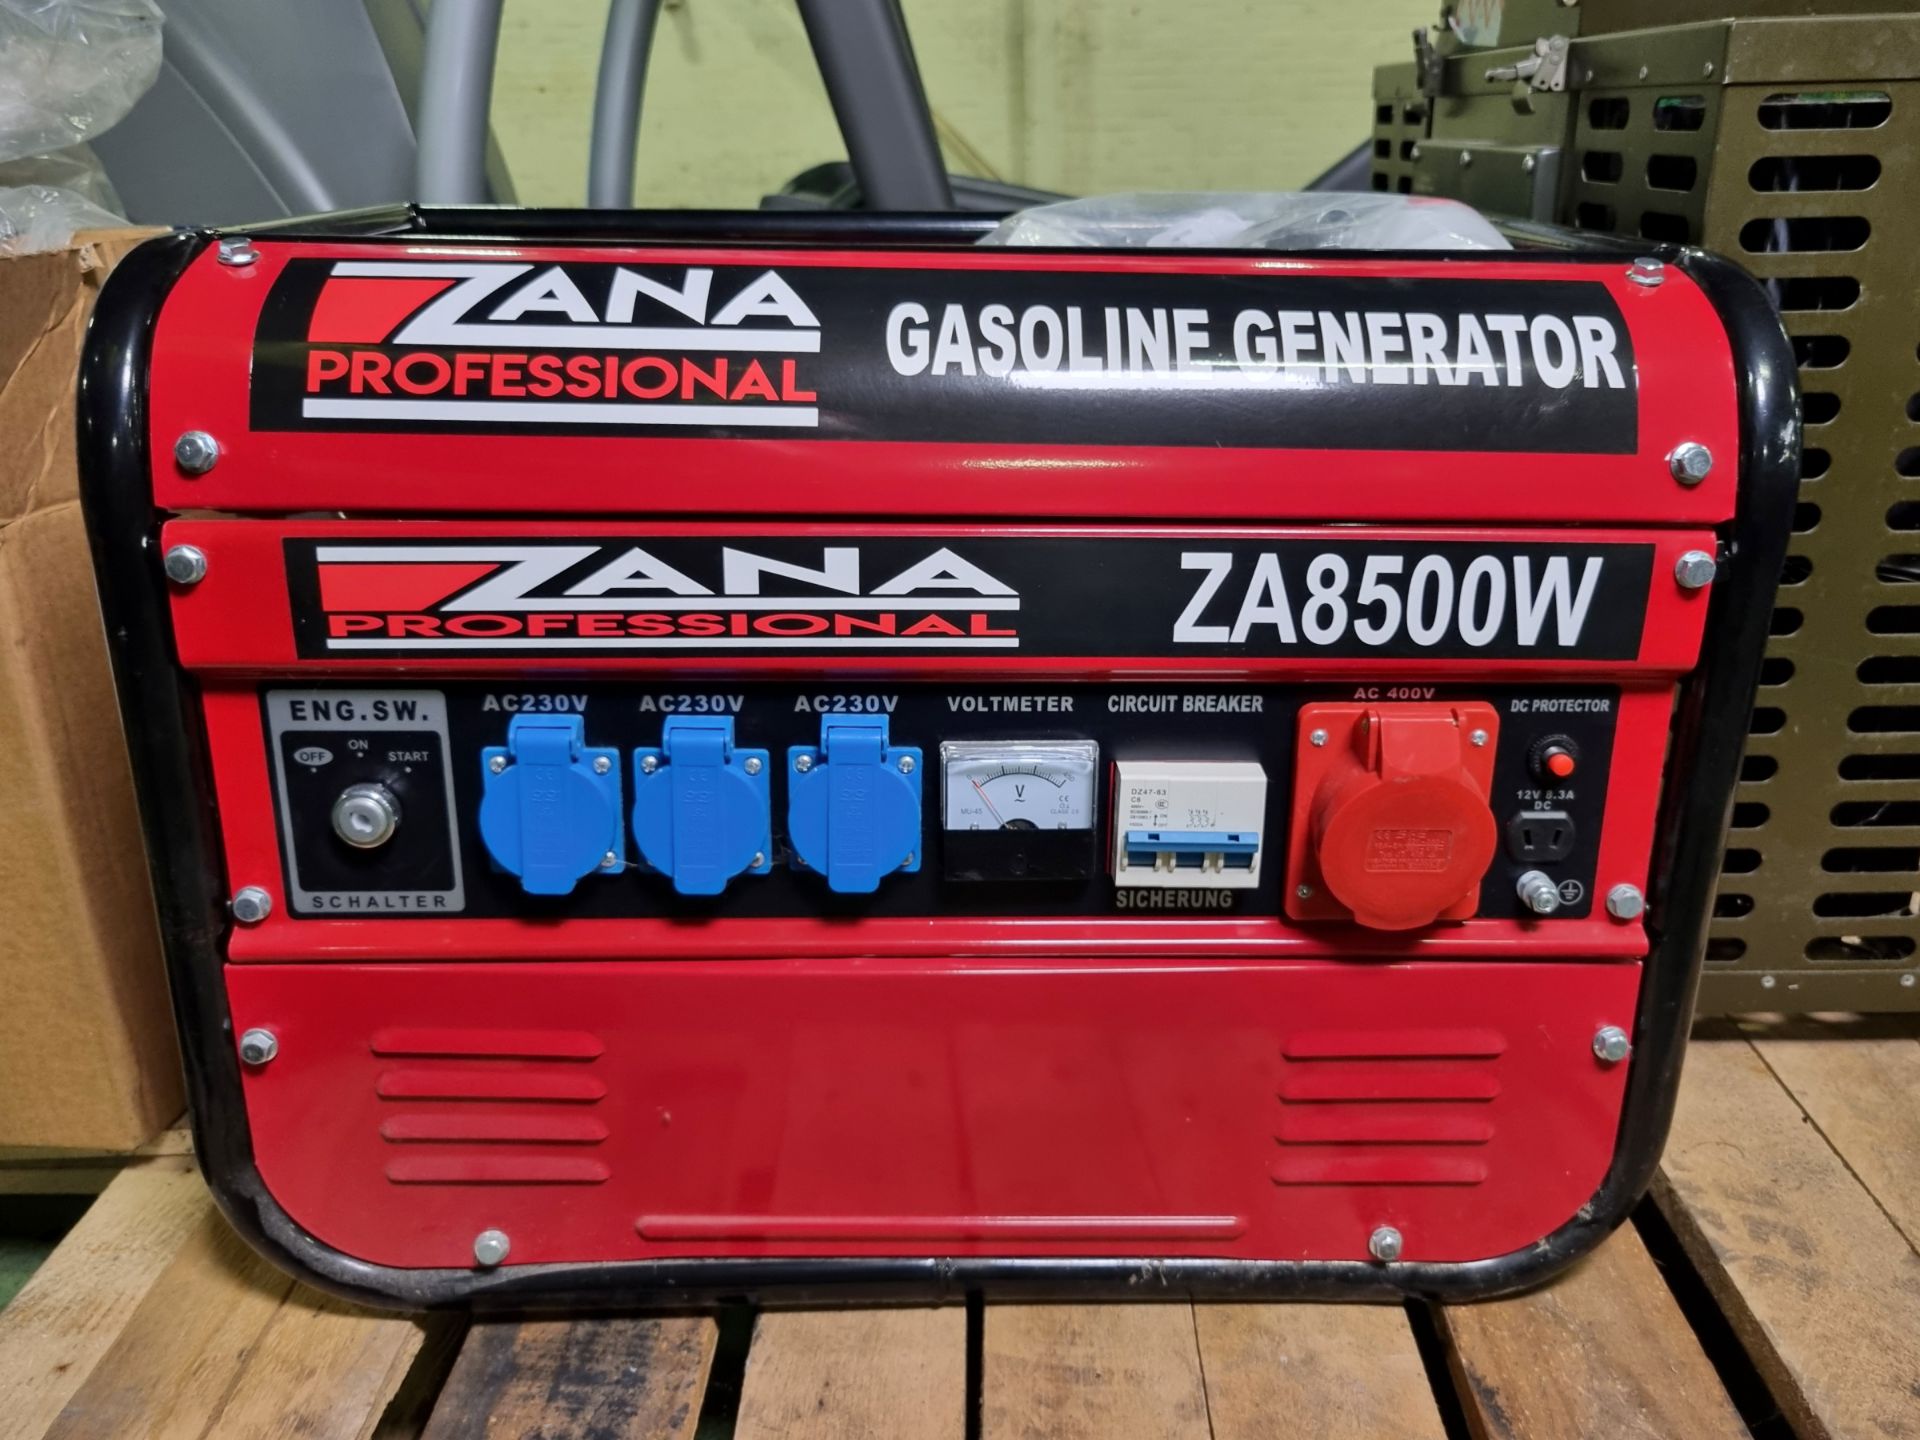 ZANA professional ZA8500W gasoline generator - Image 7 of 12